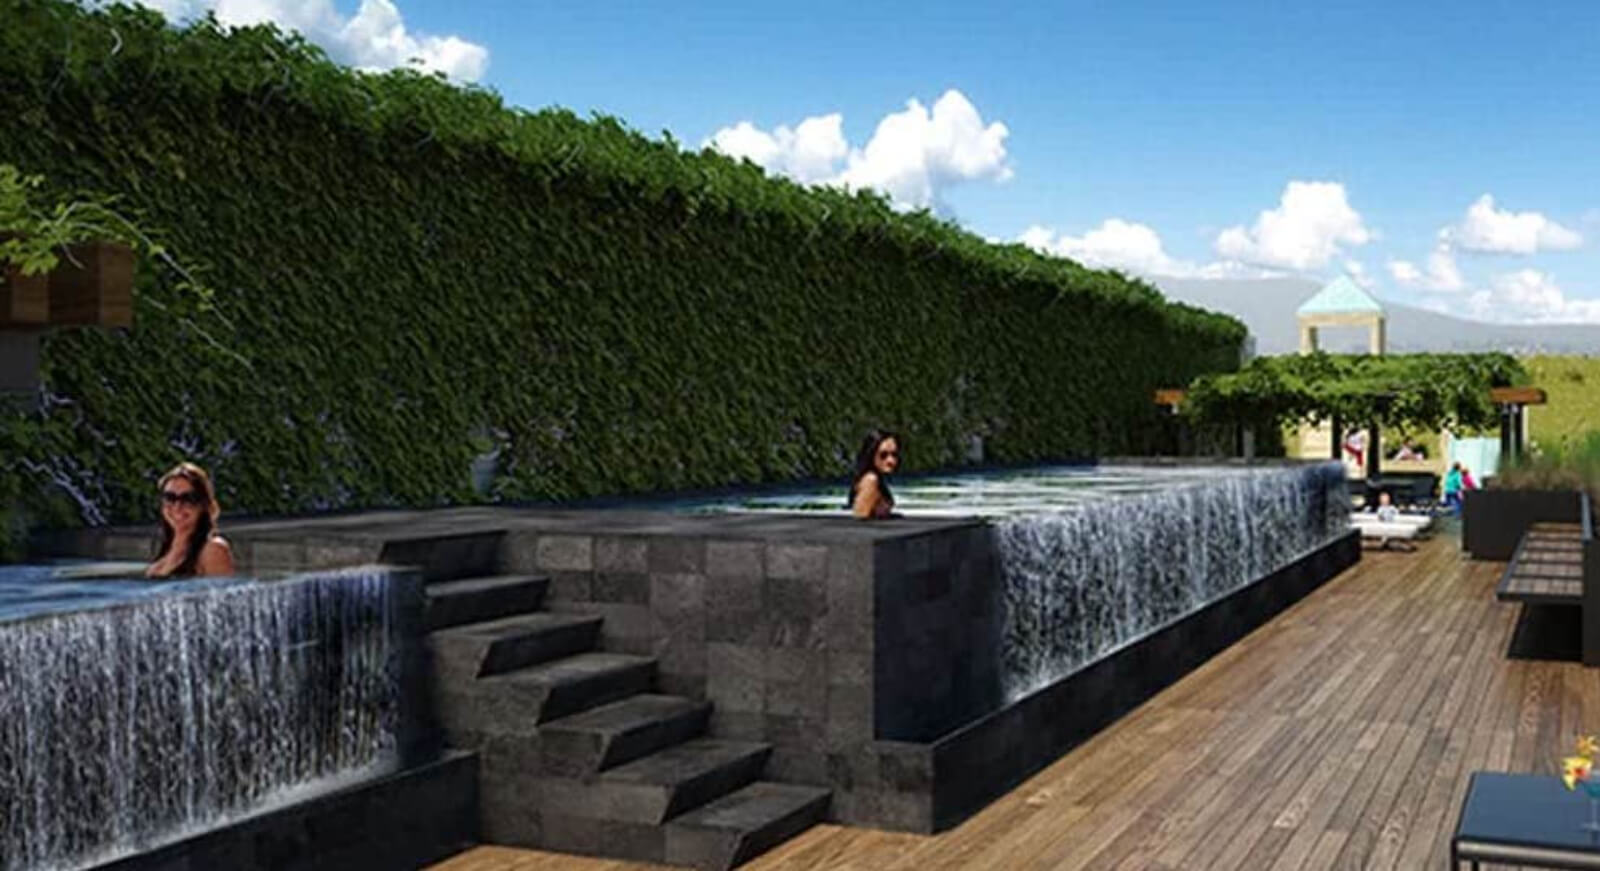 Condo with double height, garden and pool, Roma Norte, Mexico City.